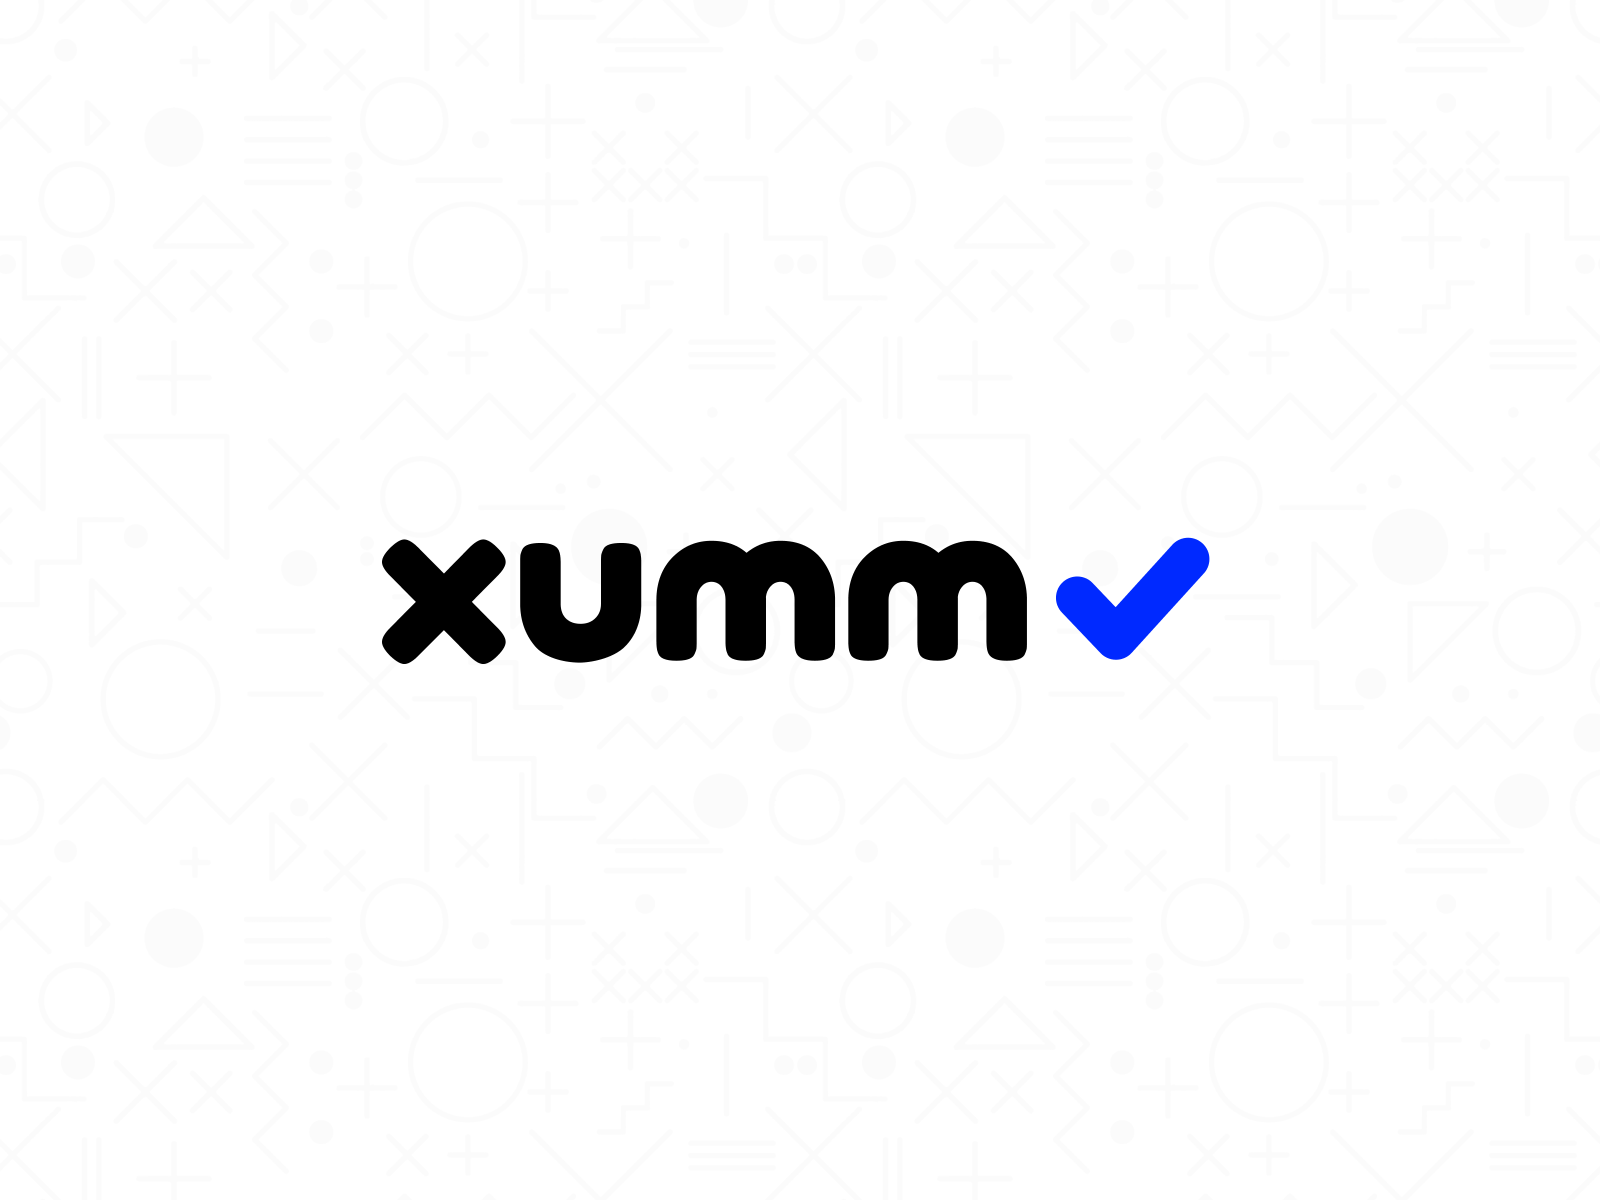 XUMM. XUMM кошелек. Кошелек XUMM логотип. XUMM кошелек криптовалюты.